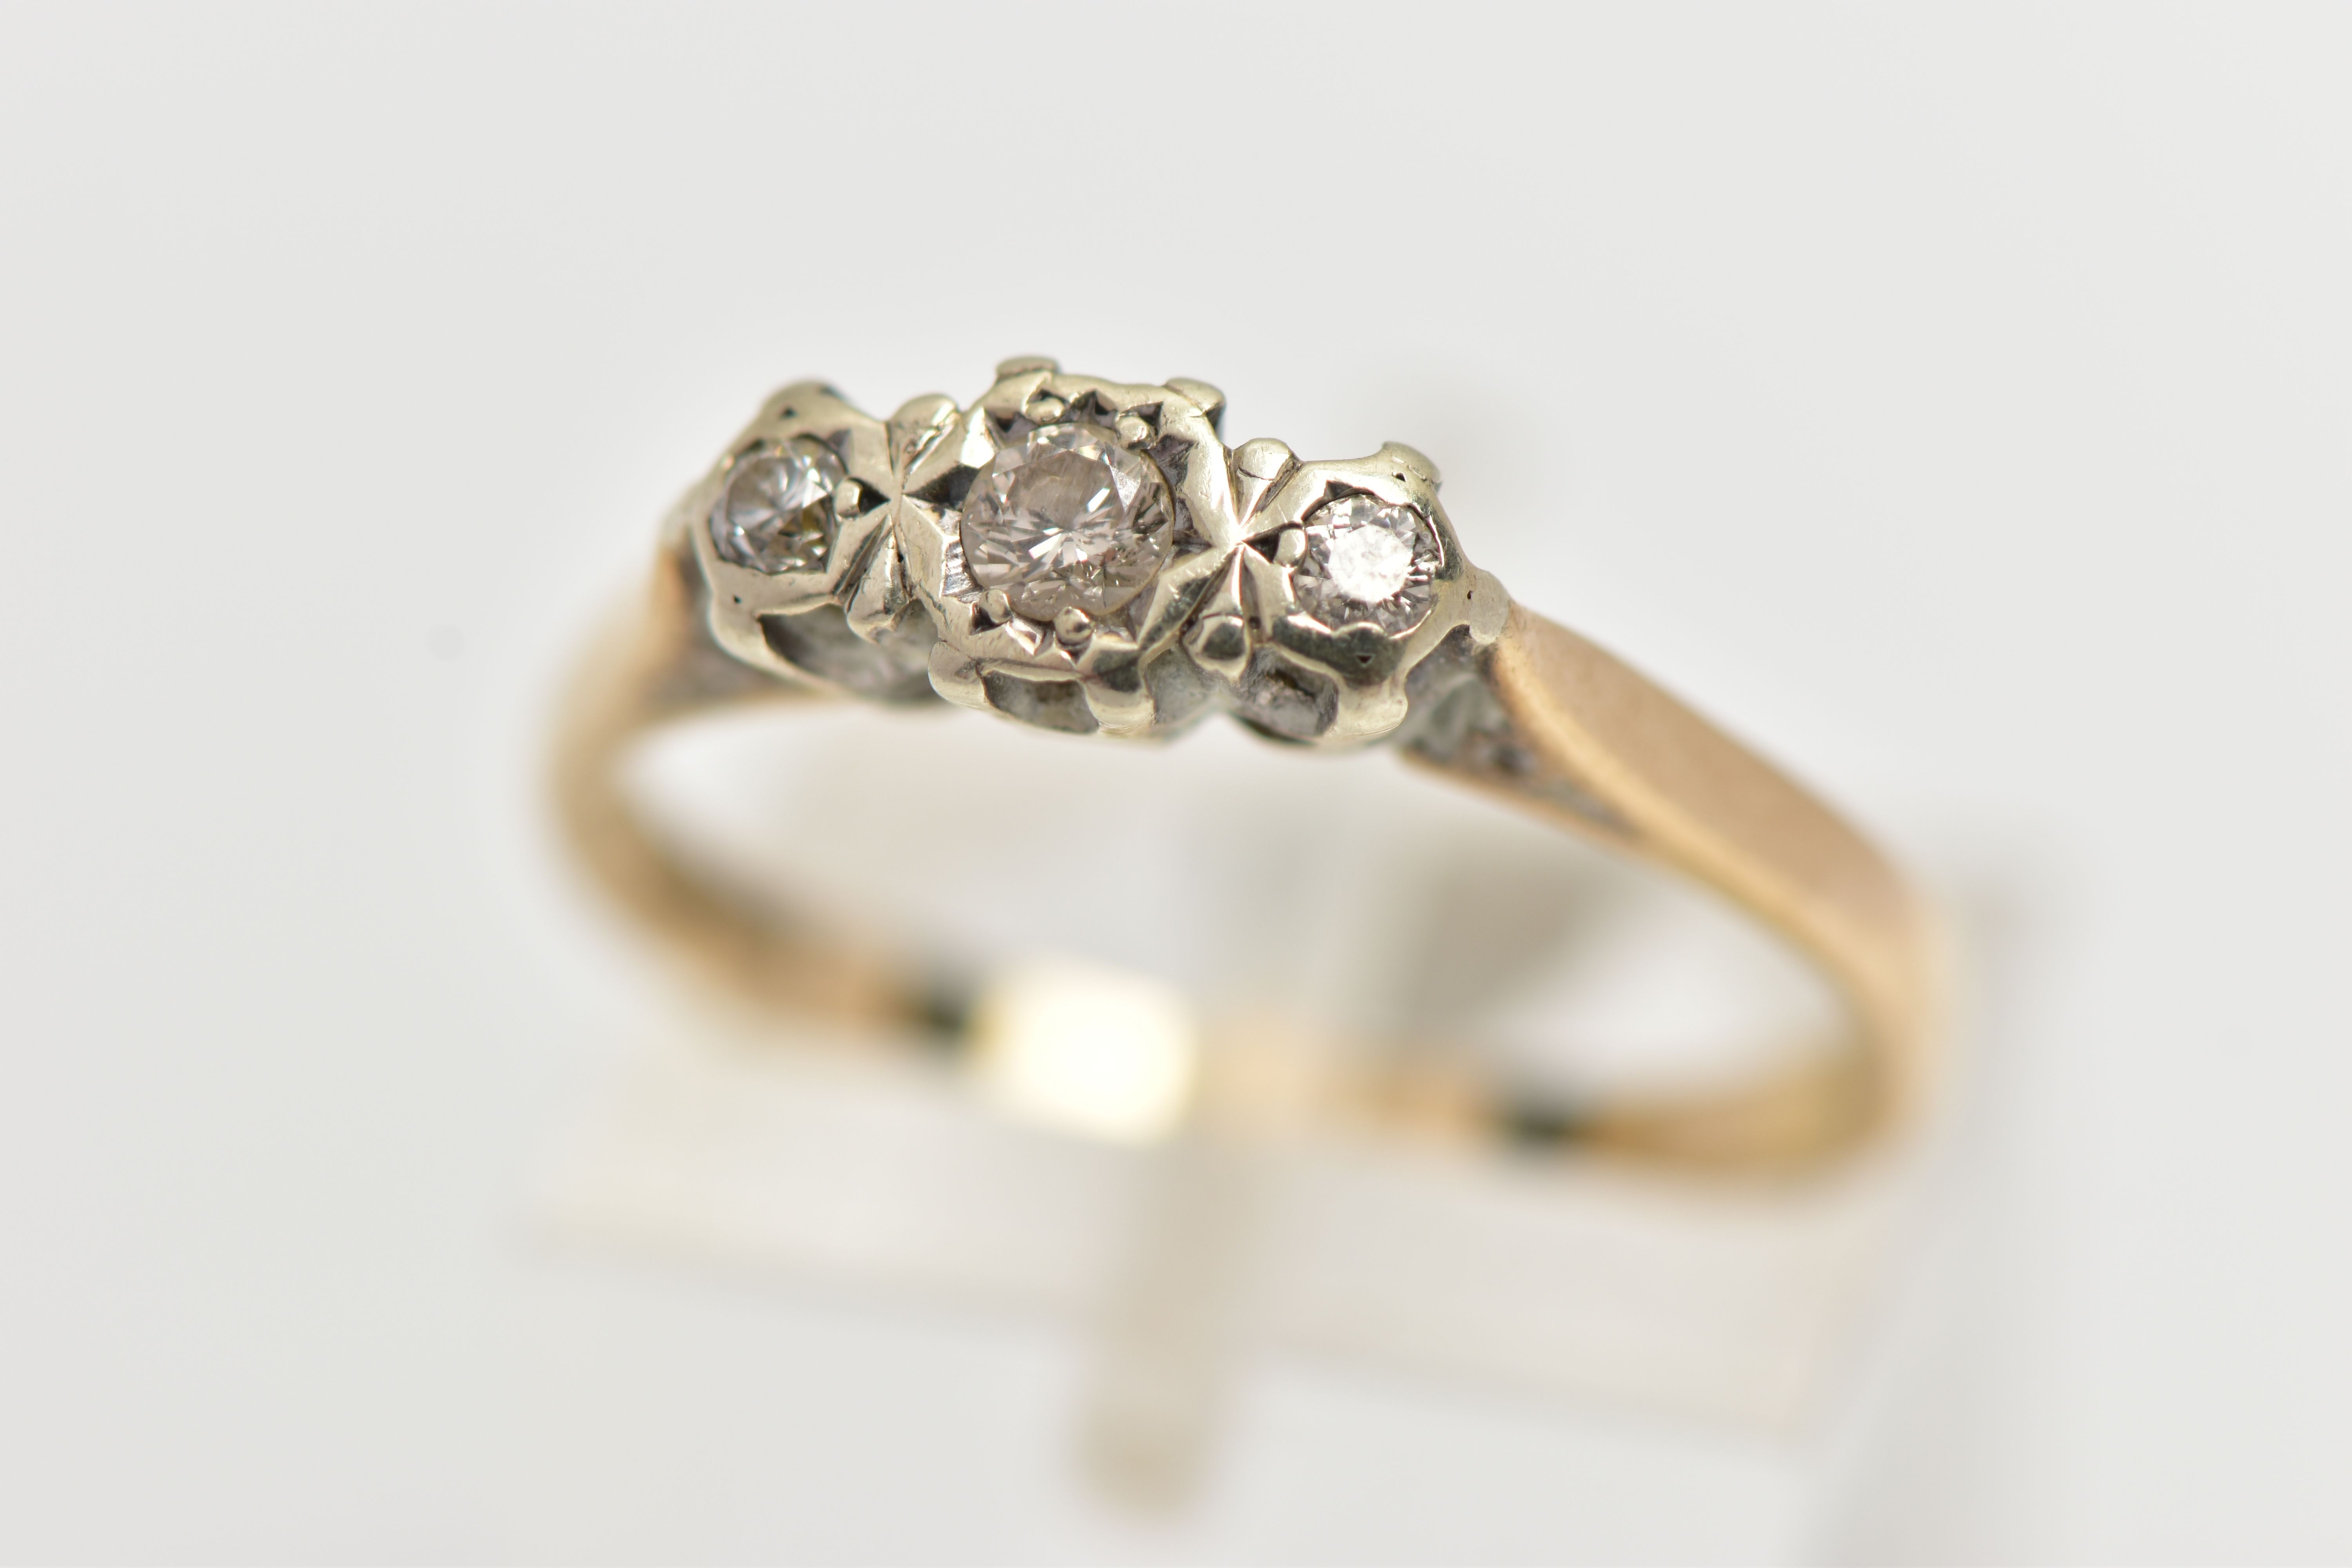 A 9CT GOLD THREE STONE DIAMOND RING, three round brilliant cut diamonds prong set in white metal